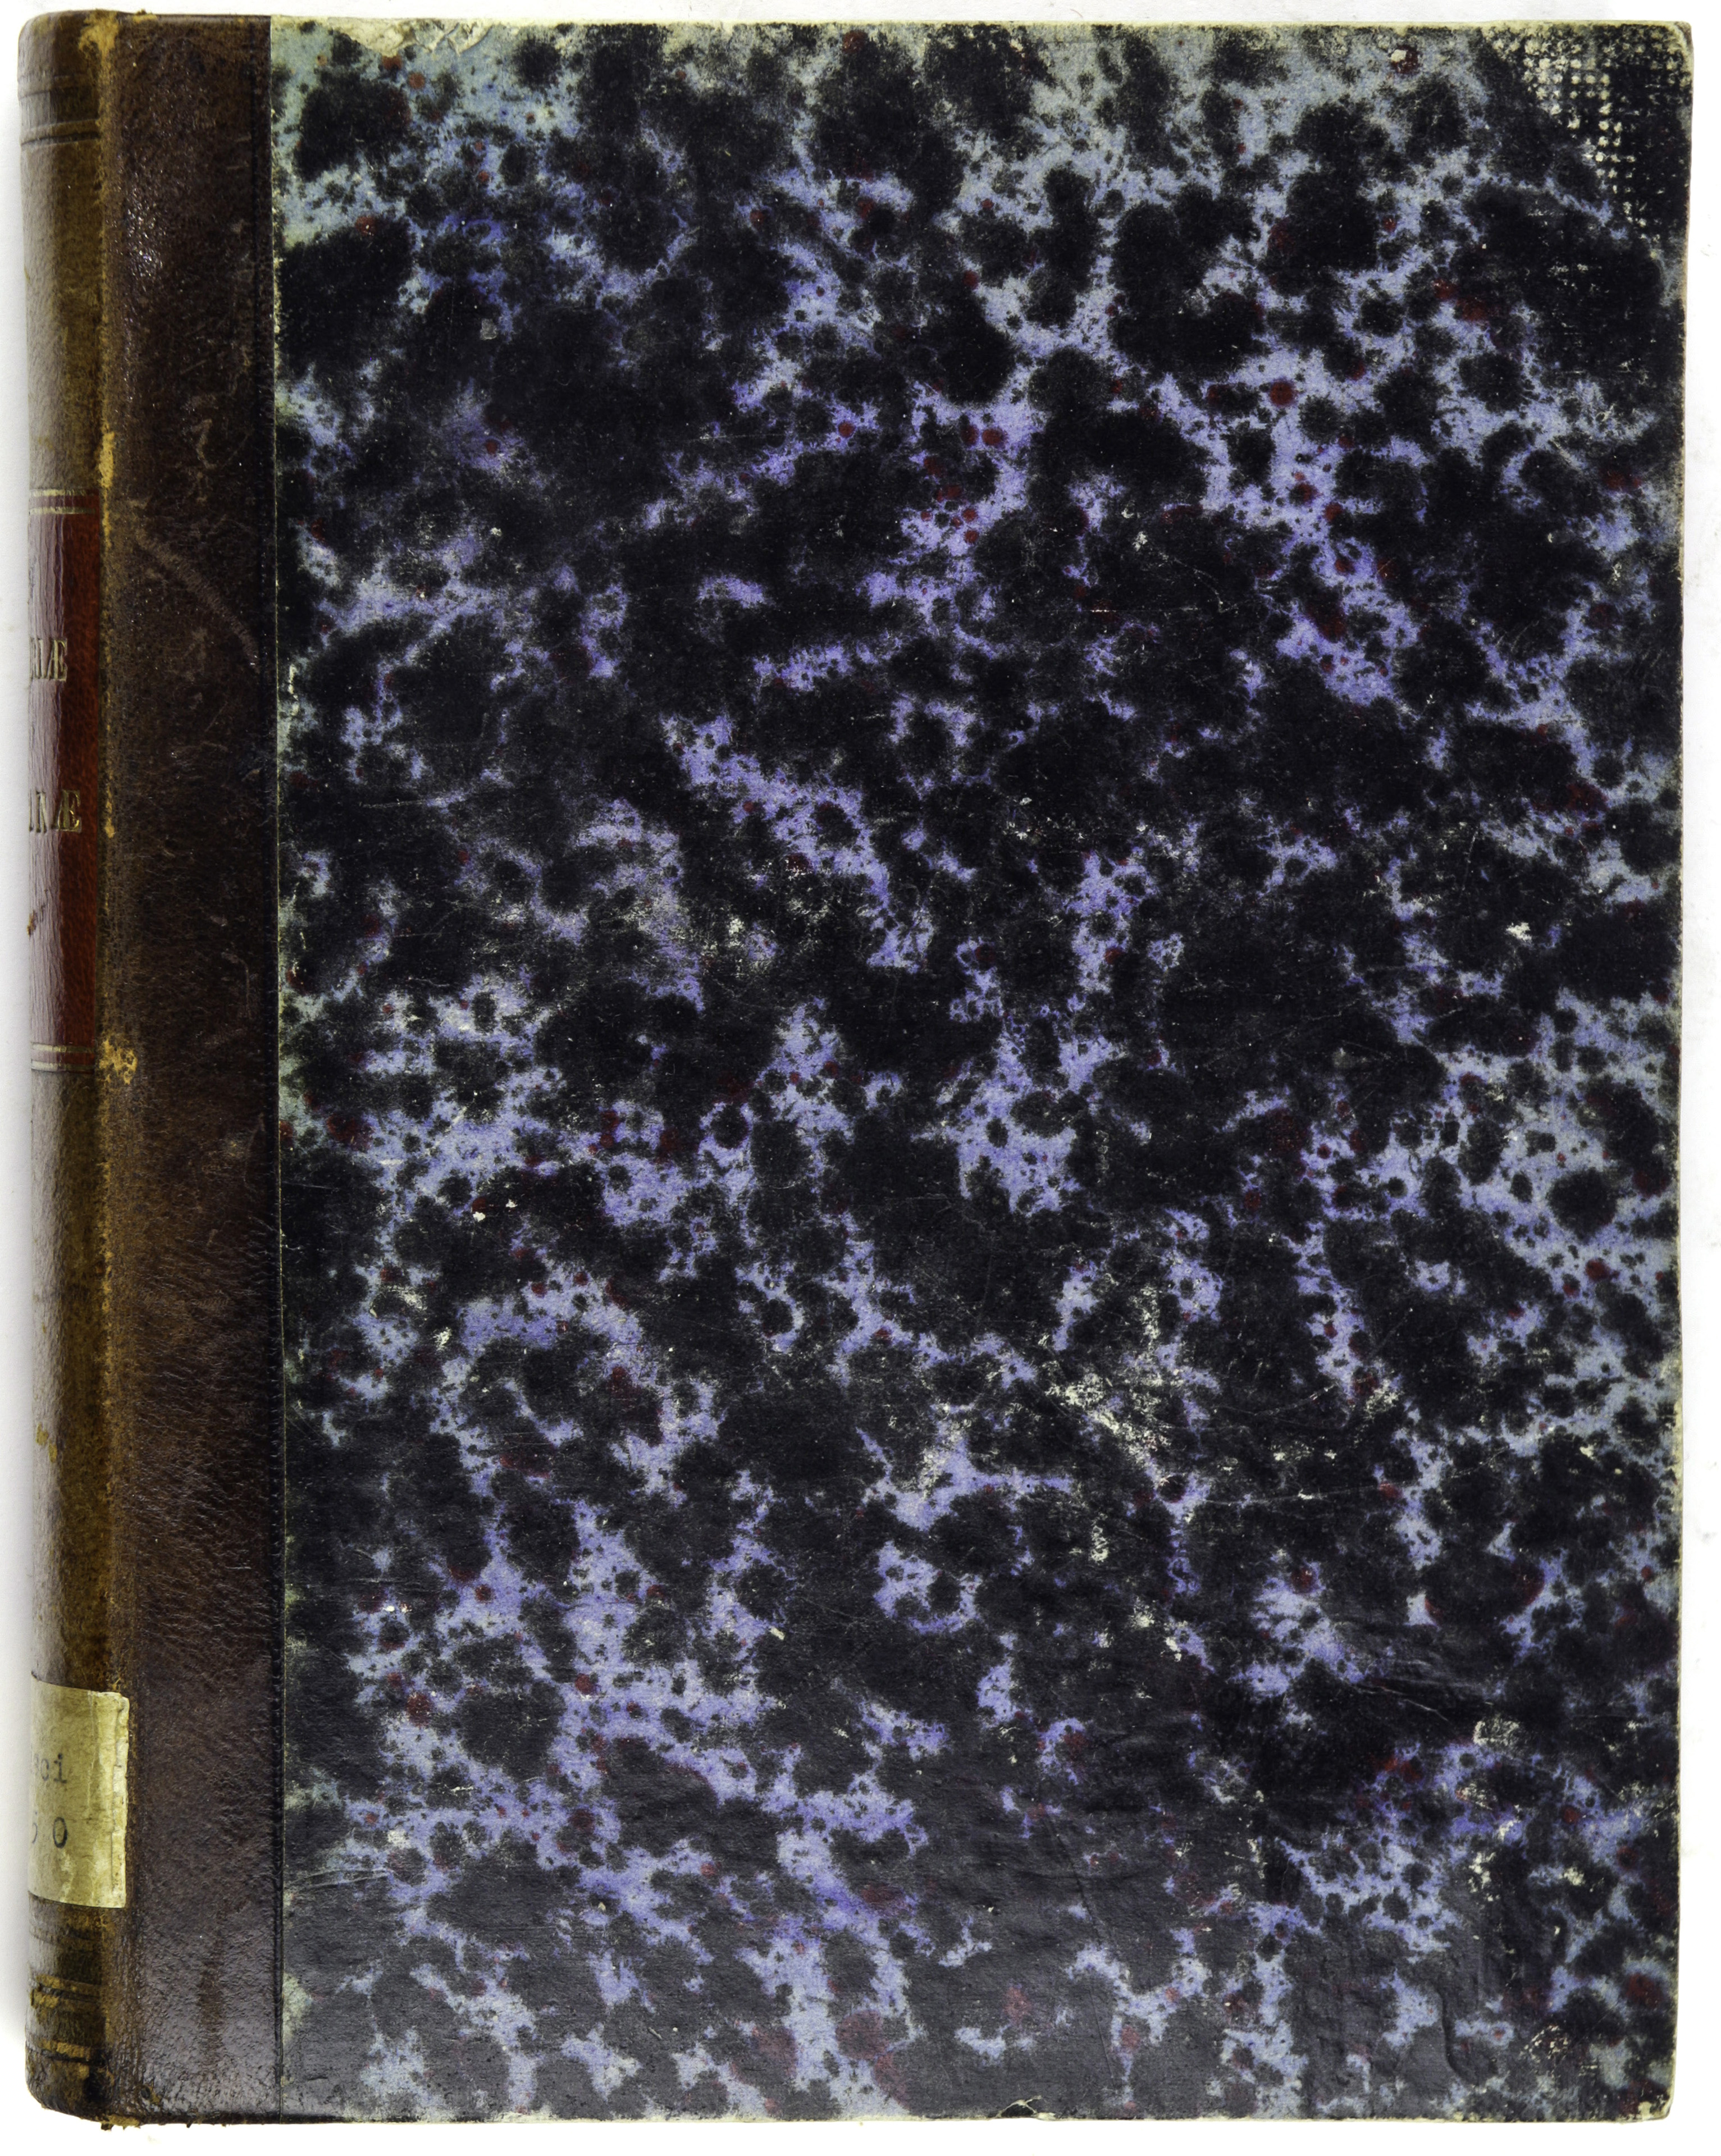 A 1650 BOOK HISTORICAL LITUANAE 3a651e